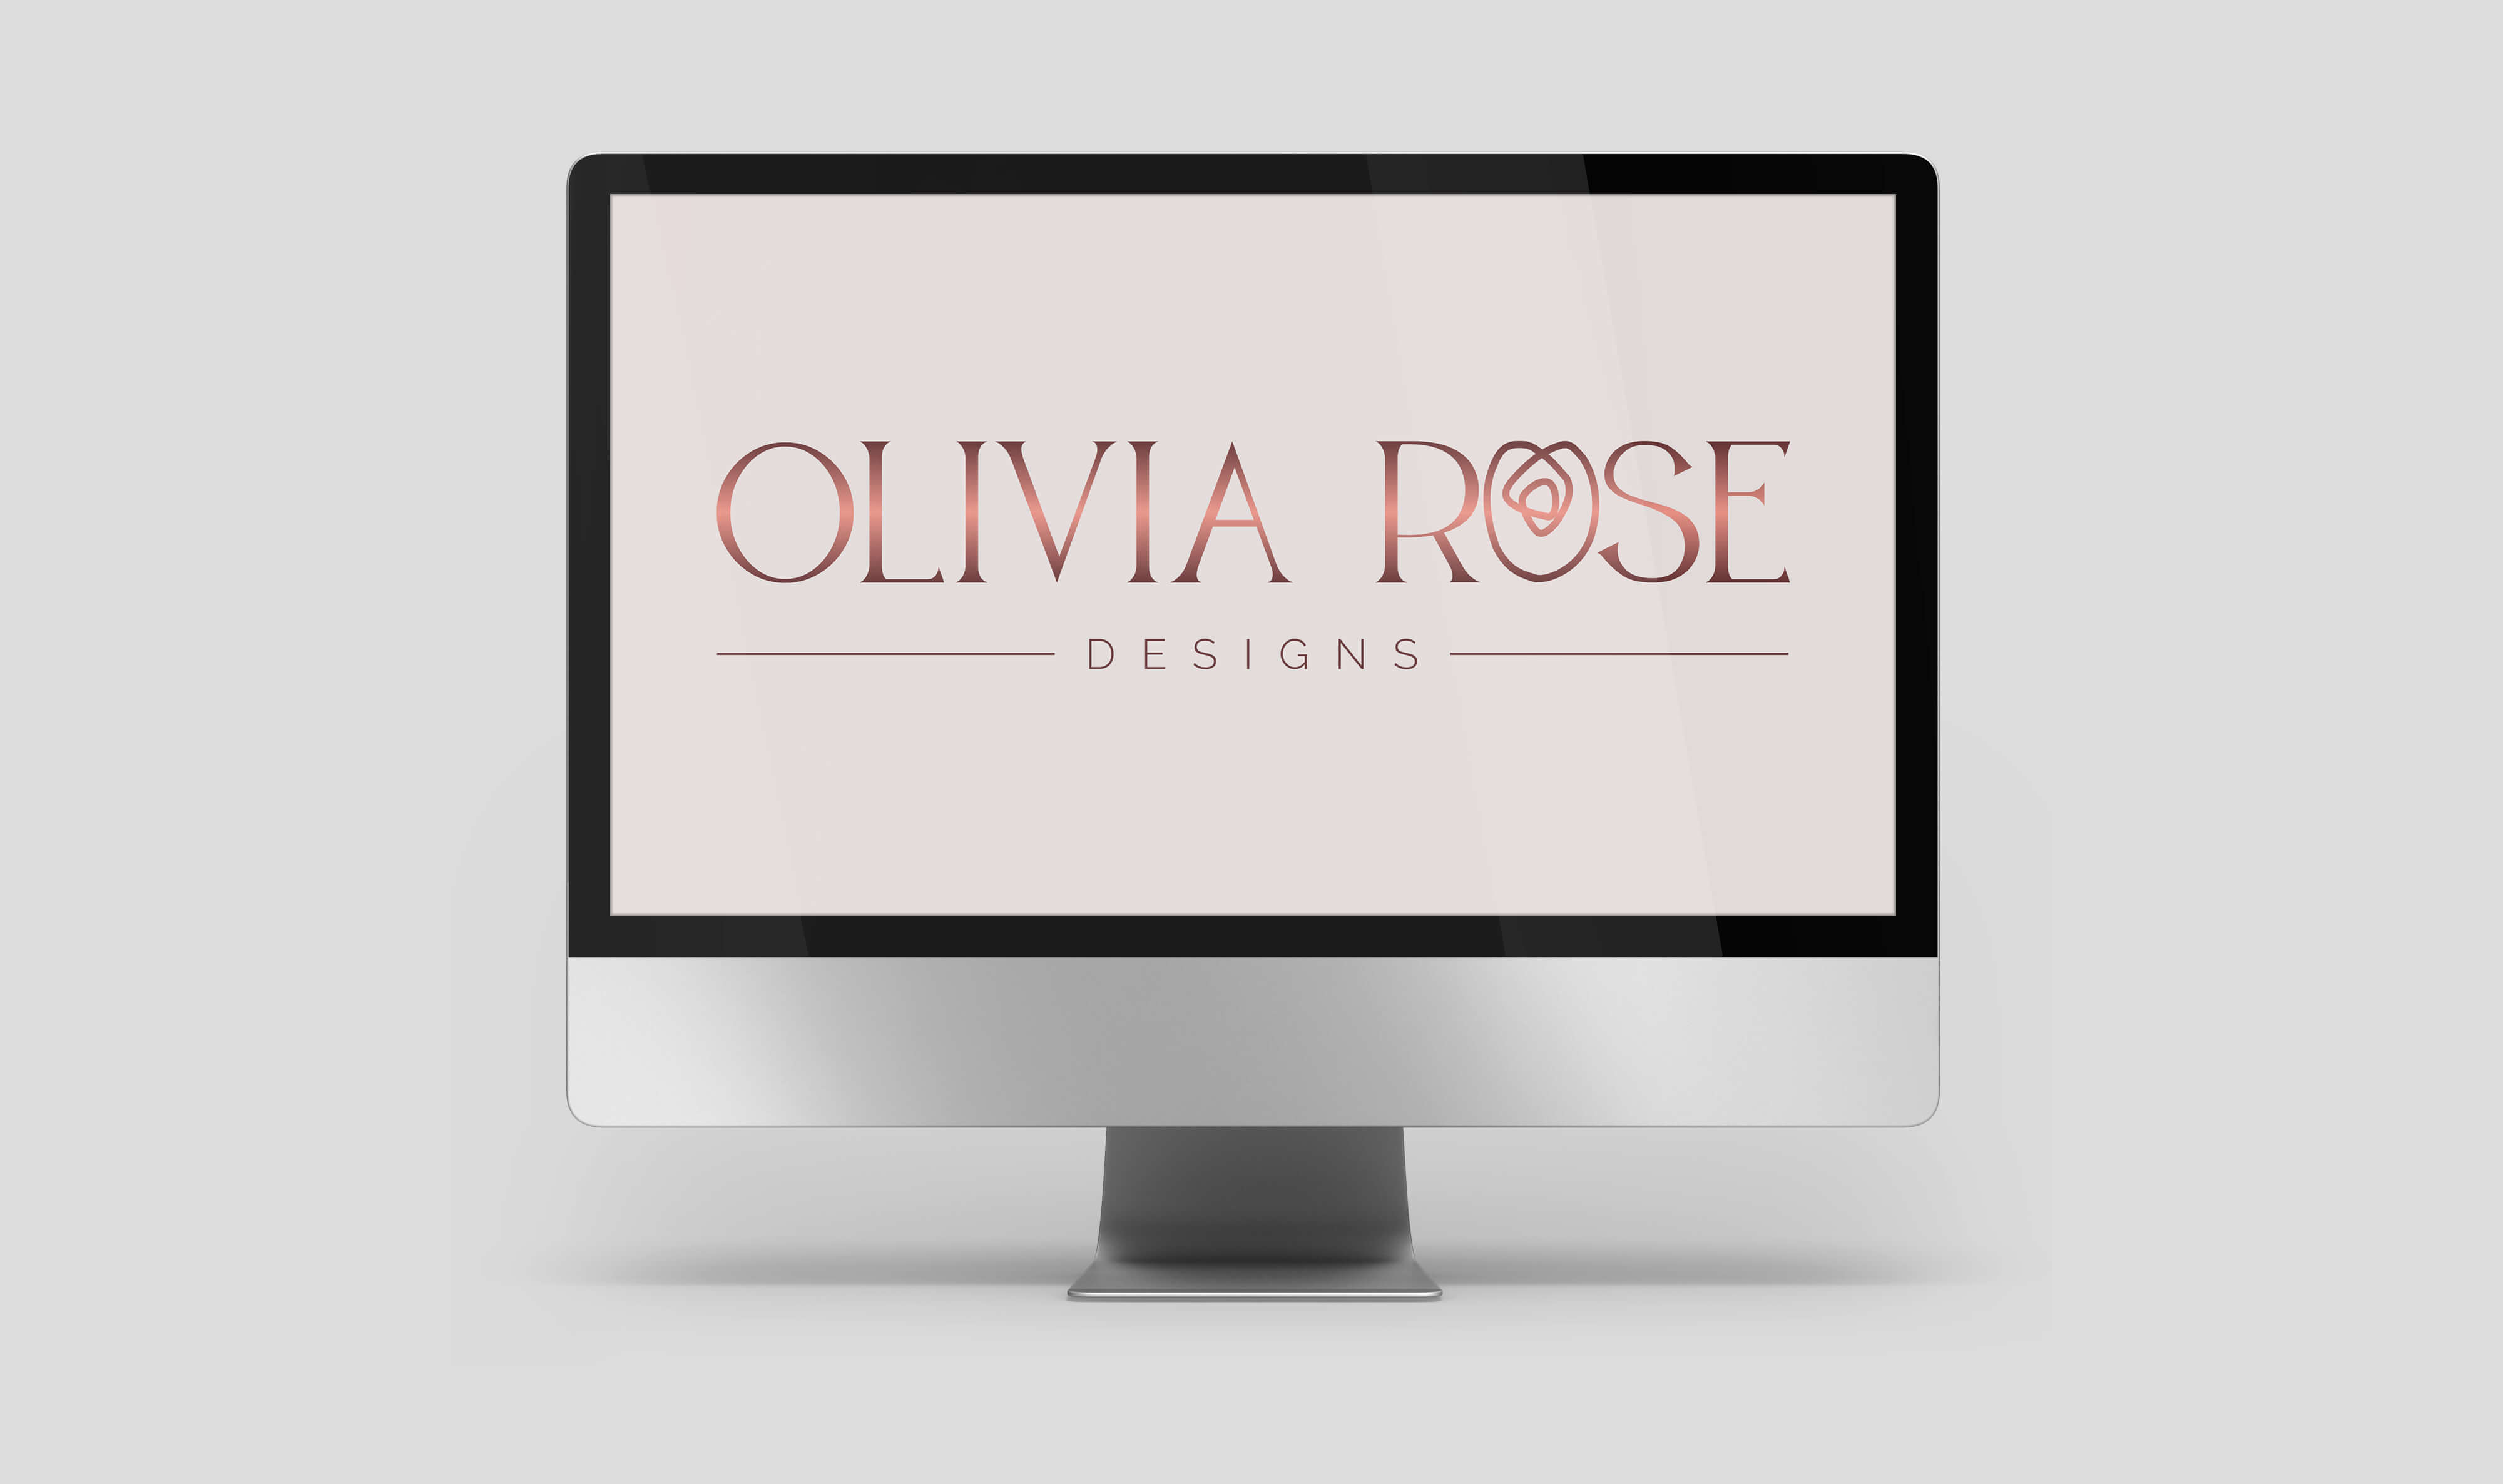 Olivia Rose Designs design on multiple devices